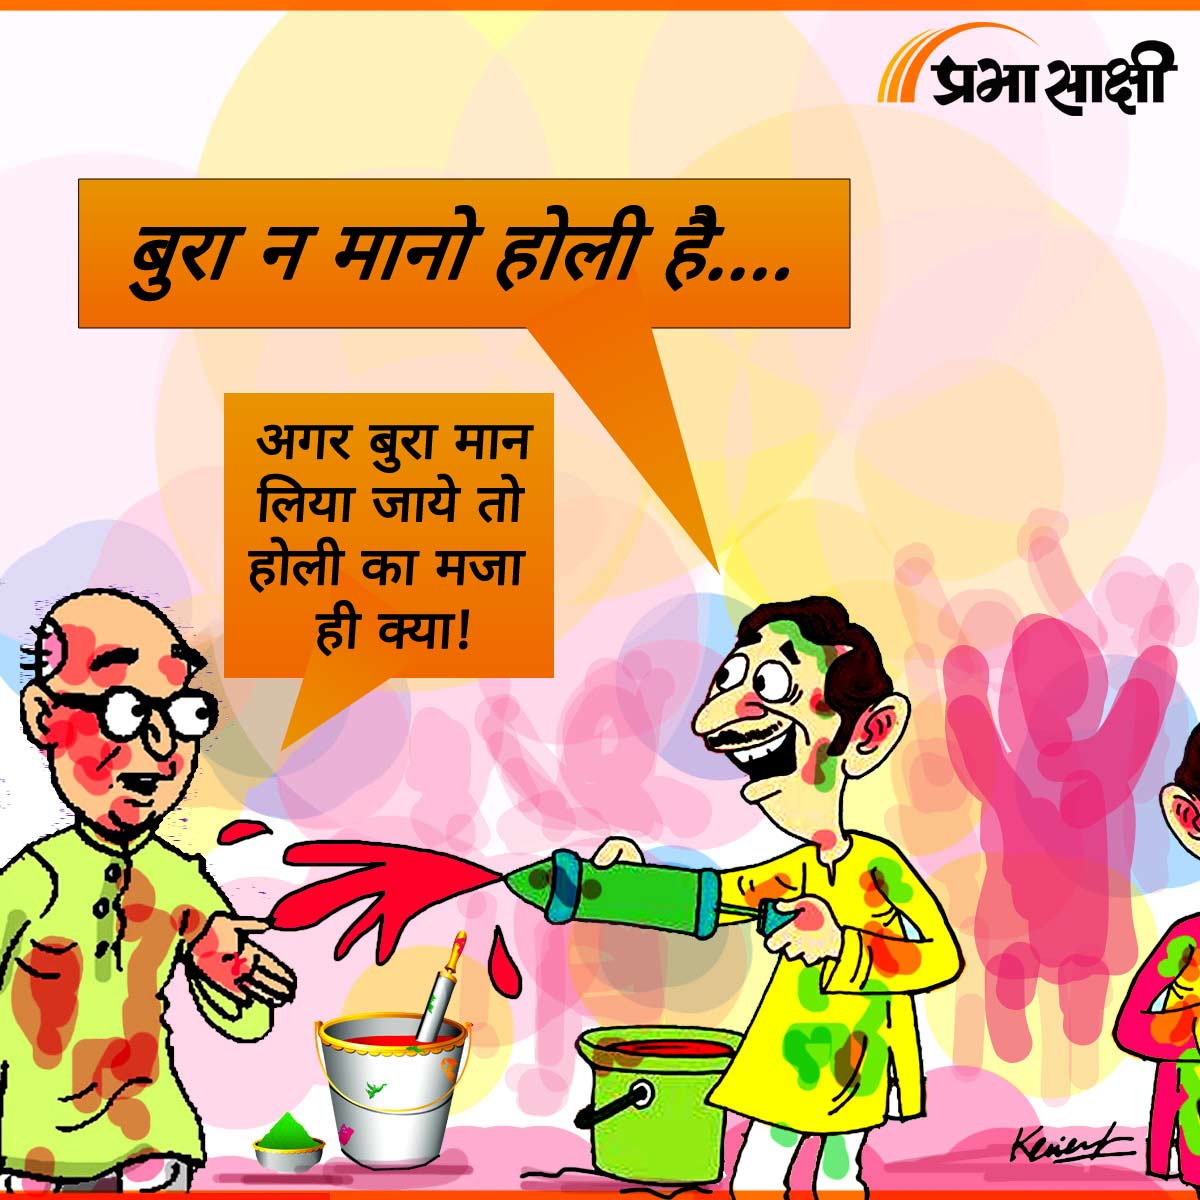 Prabhasakshi Cartoon: Today Cartoon, Latest Cartoon in Hindi, Hindi News,  हिन्दी समाचार | कार्टून